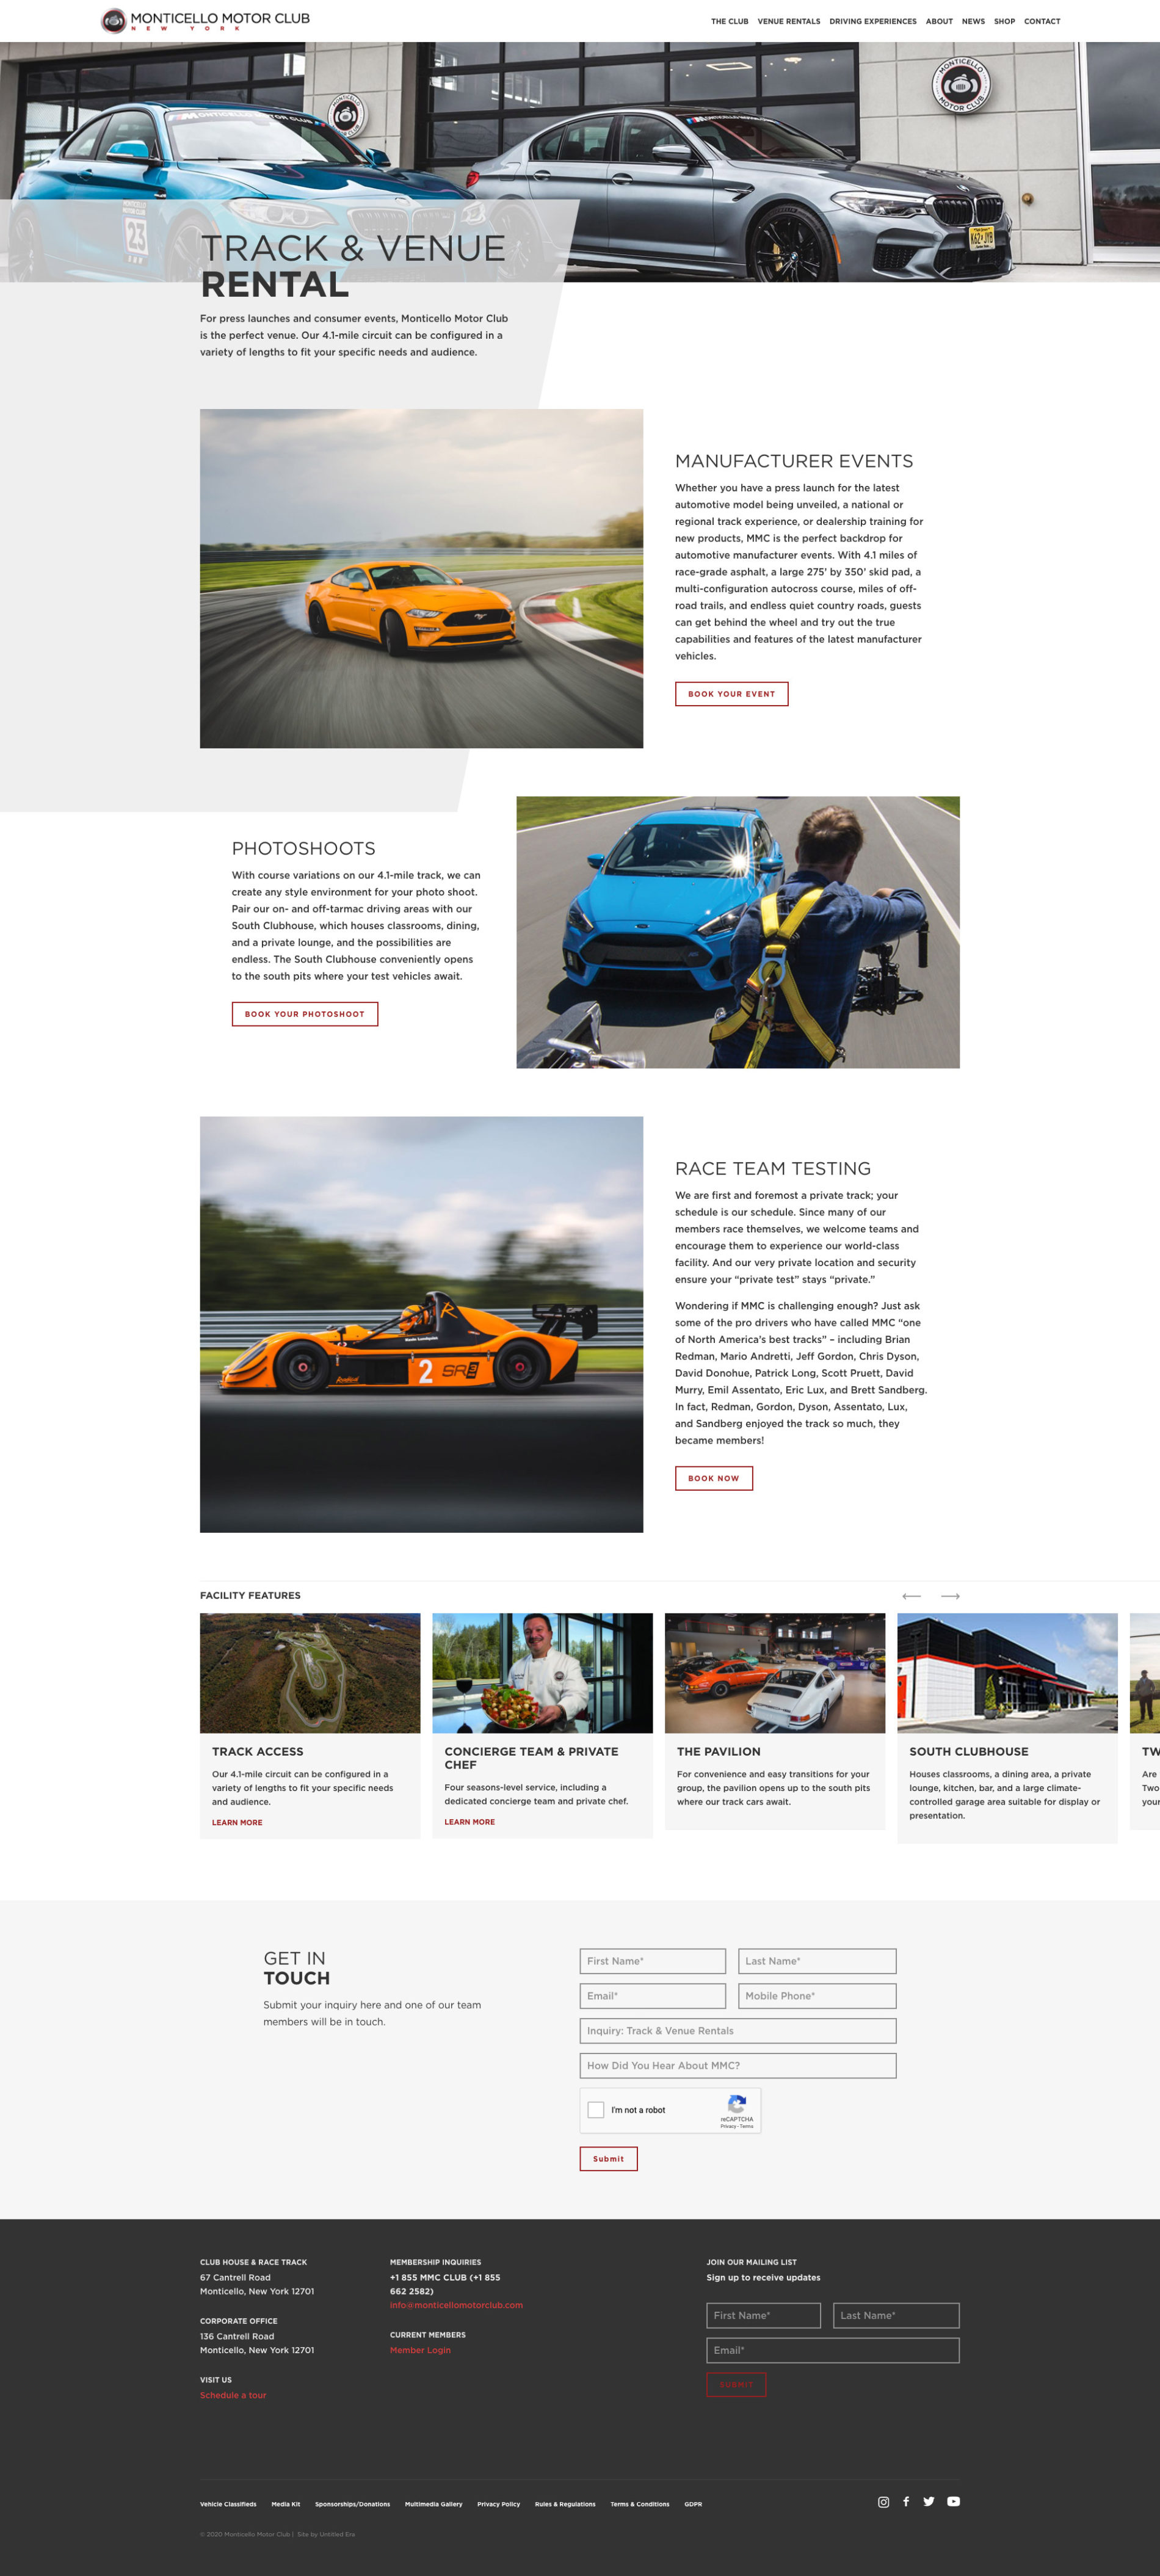 A screenshot of the MMC website Track & Venue Rental page